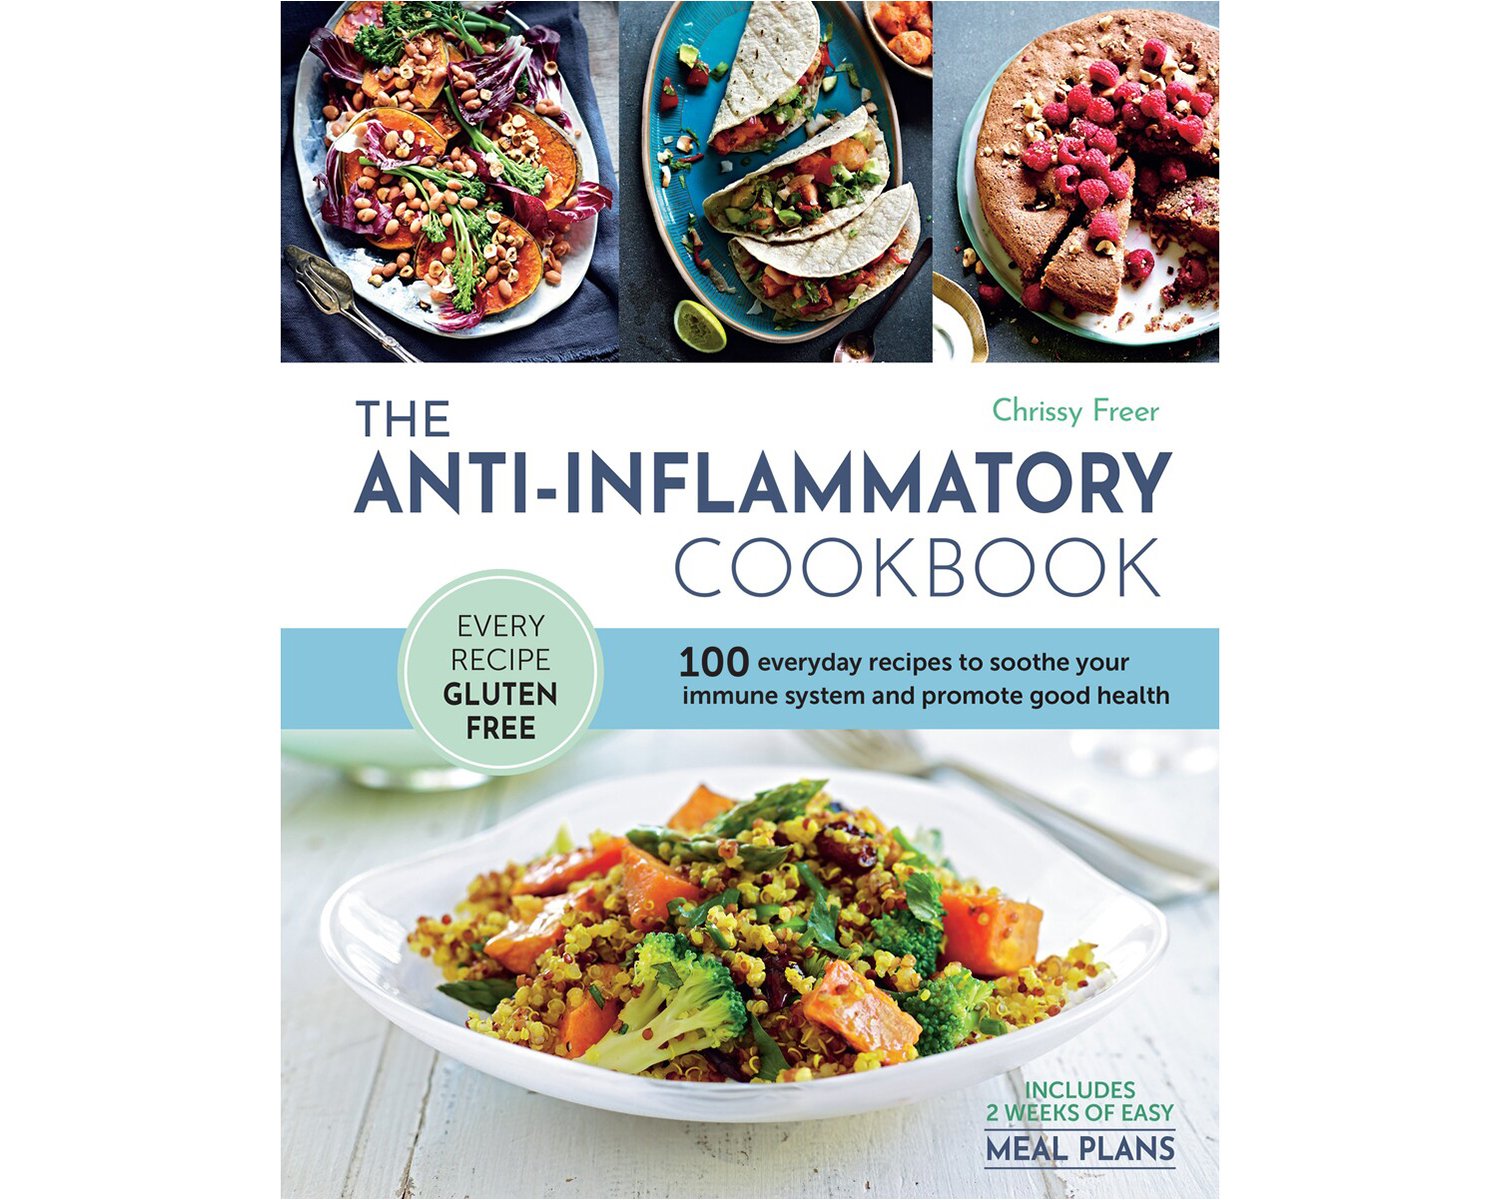 The Anti-Inflammatory Cookbook